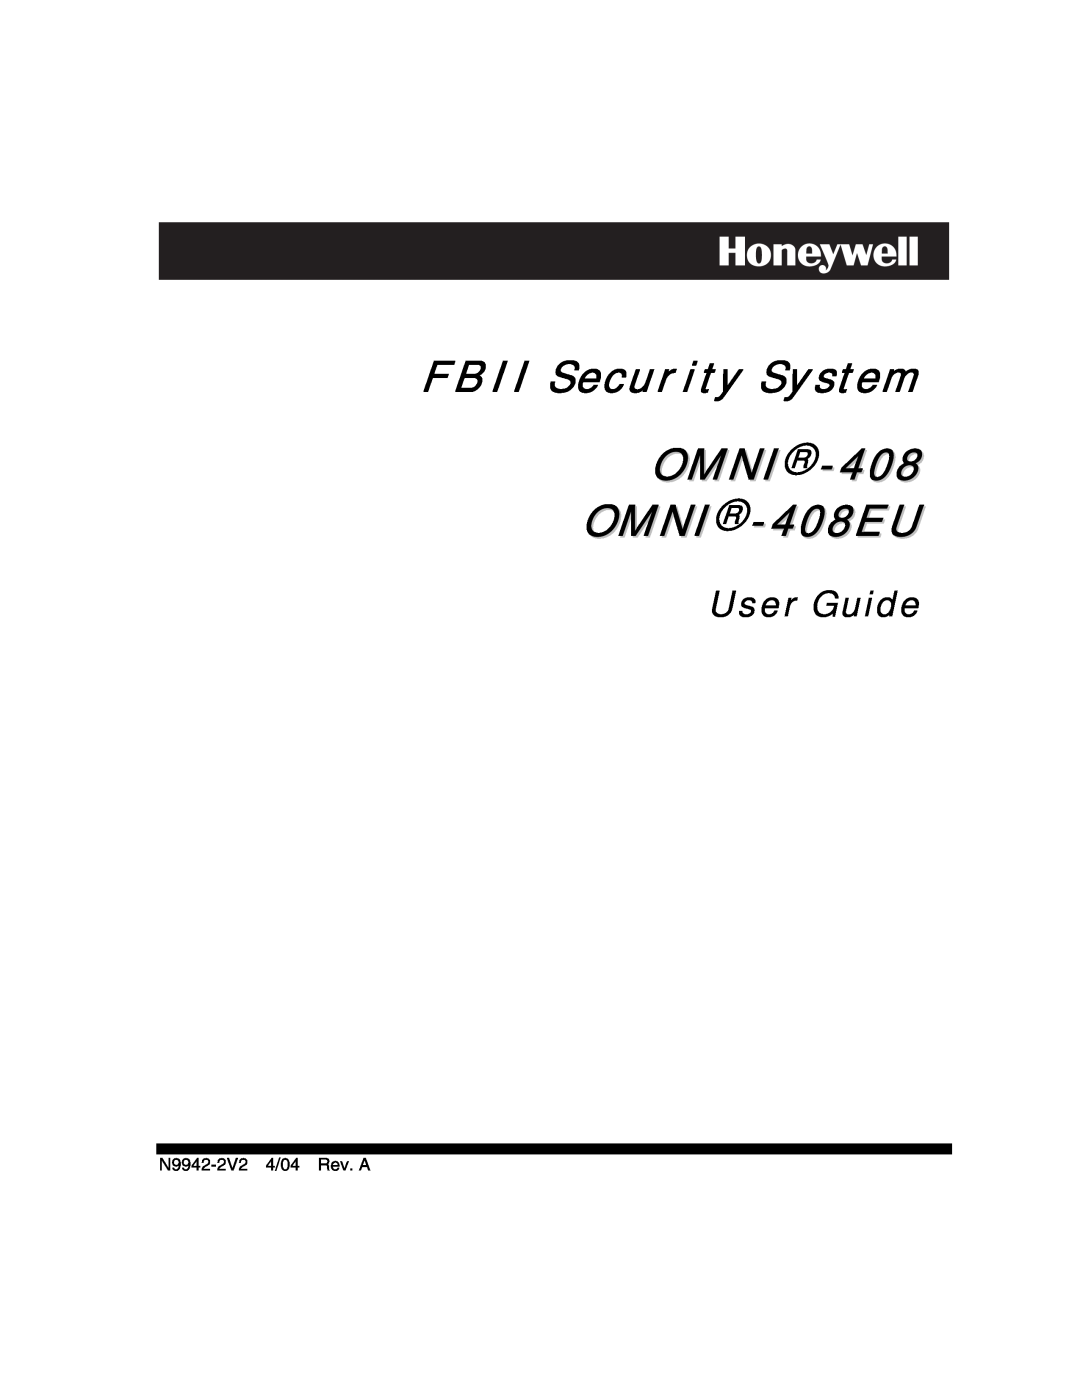 Honeywell manual FBII Security System OMNI-408 OMNI-408EU, User Guide 